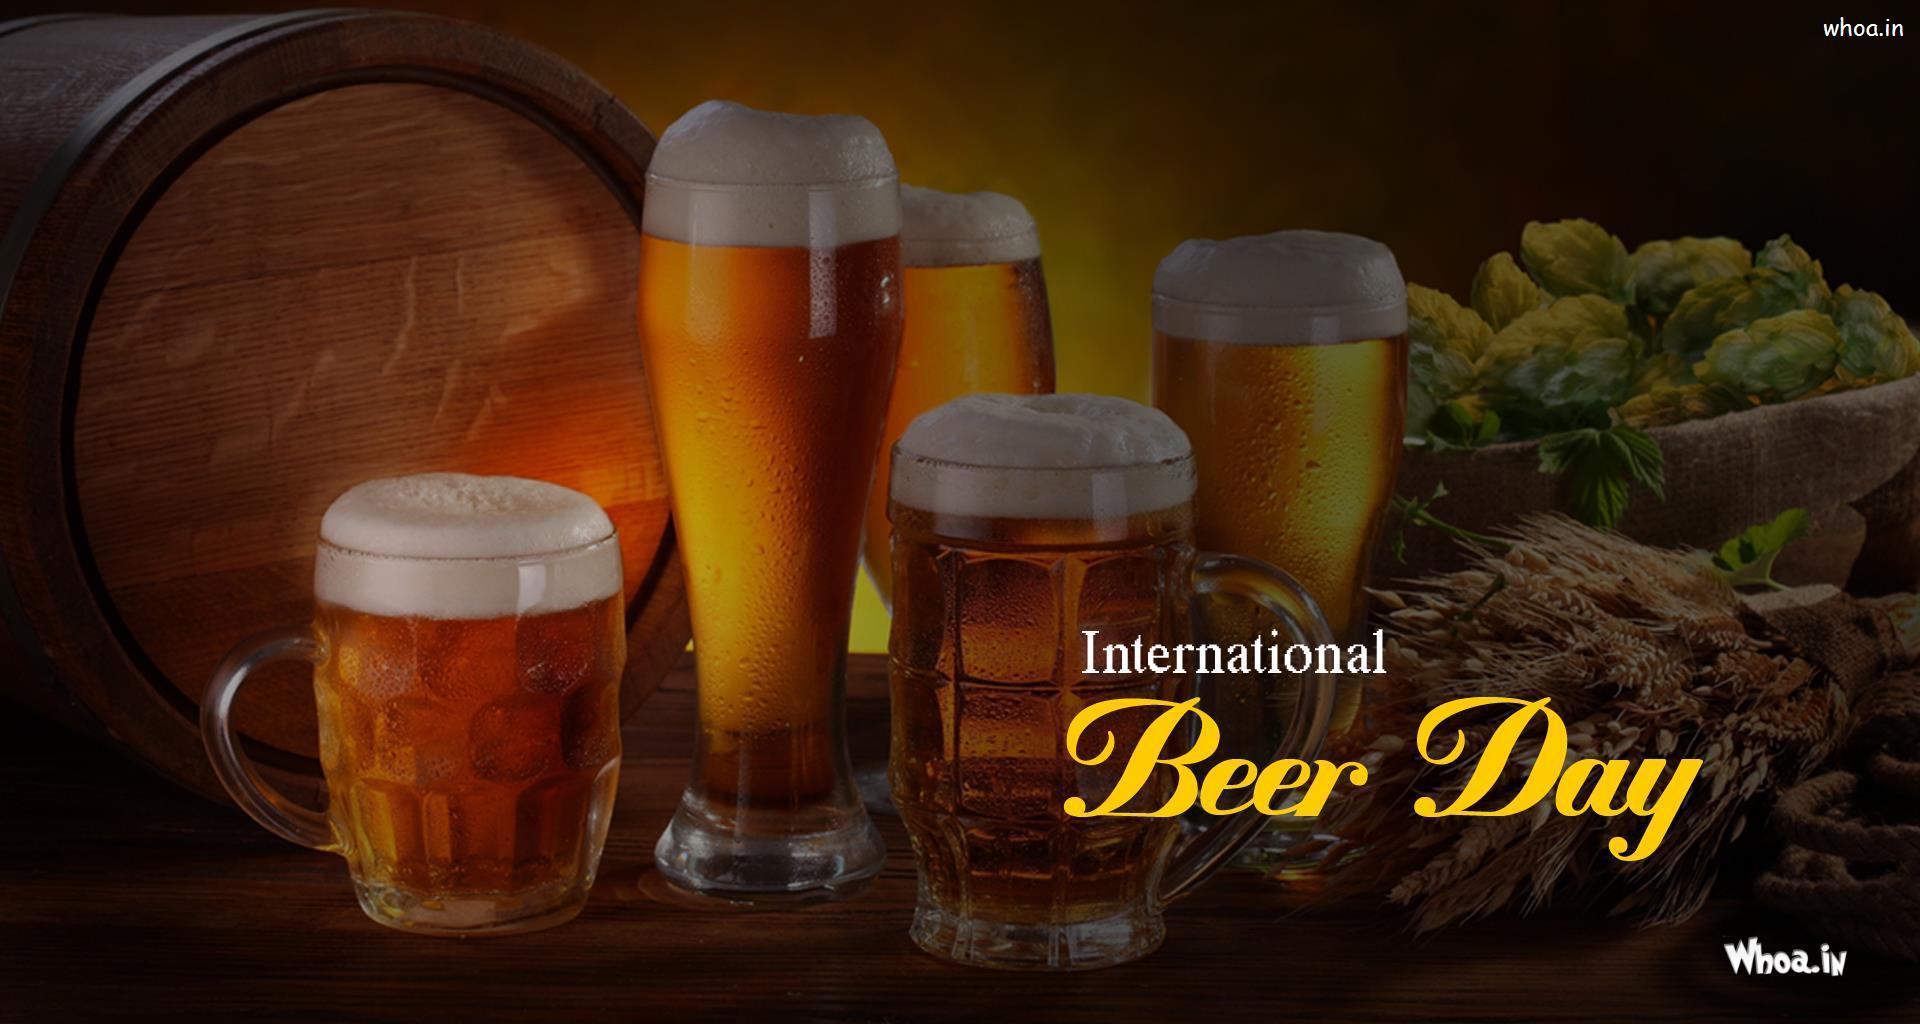 HD Wallpaper Of International Beer Day